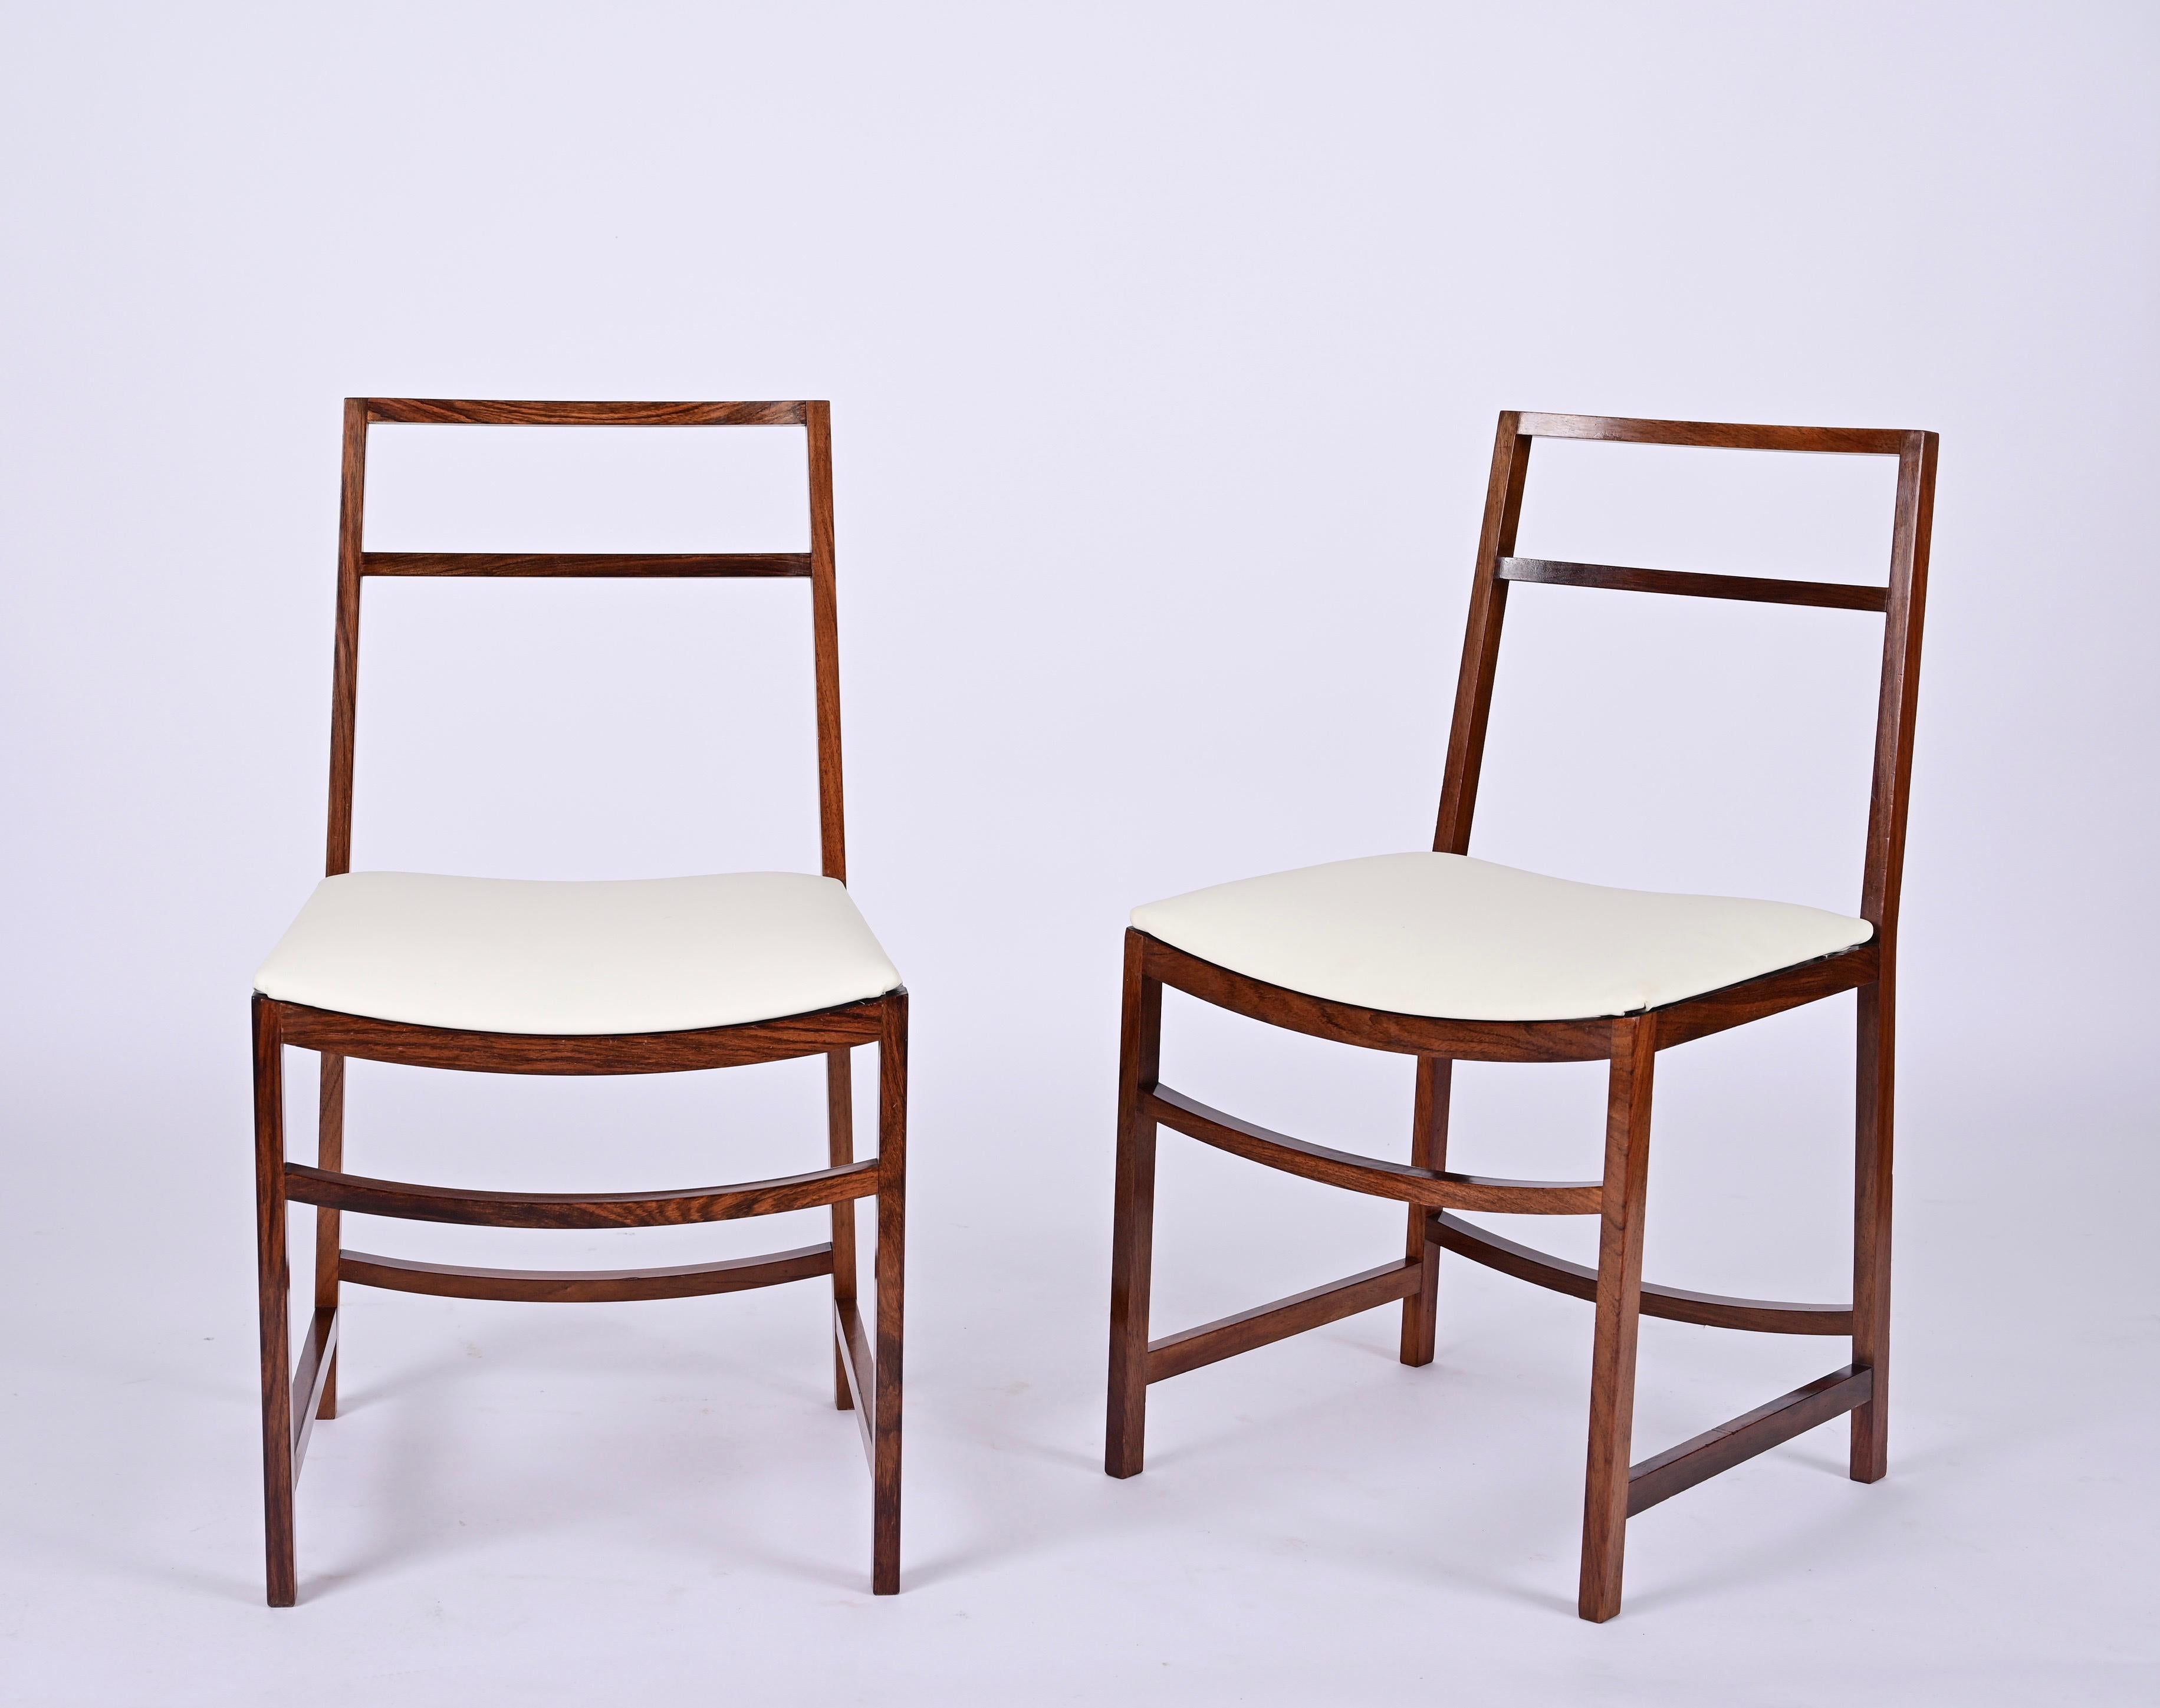 Midcentury Italian Dining Chairs in Teak, Renato Venturi for MIM Roma, 1960s For Sale 14